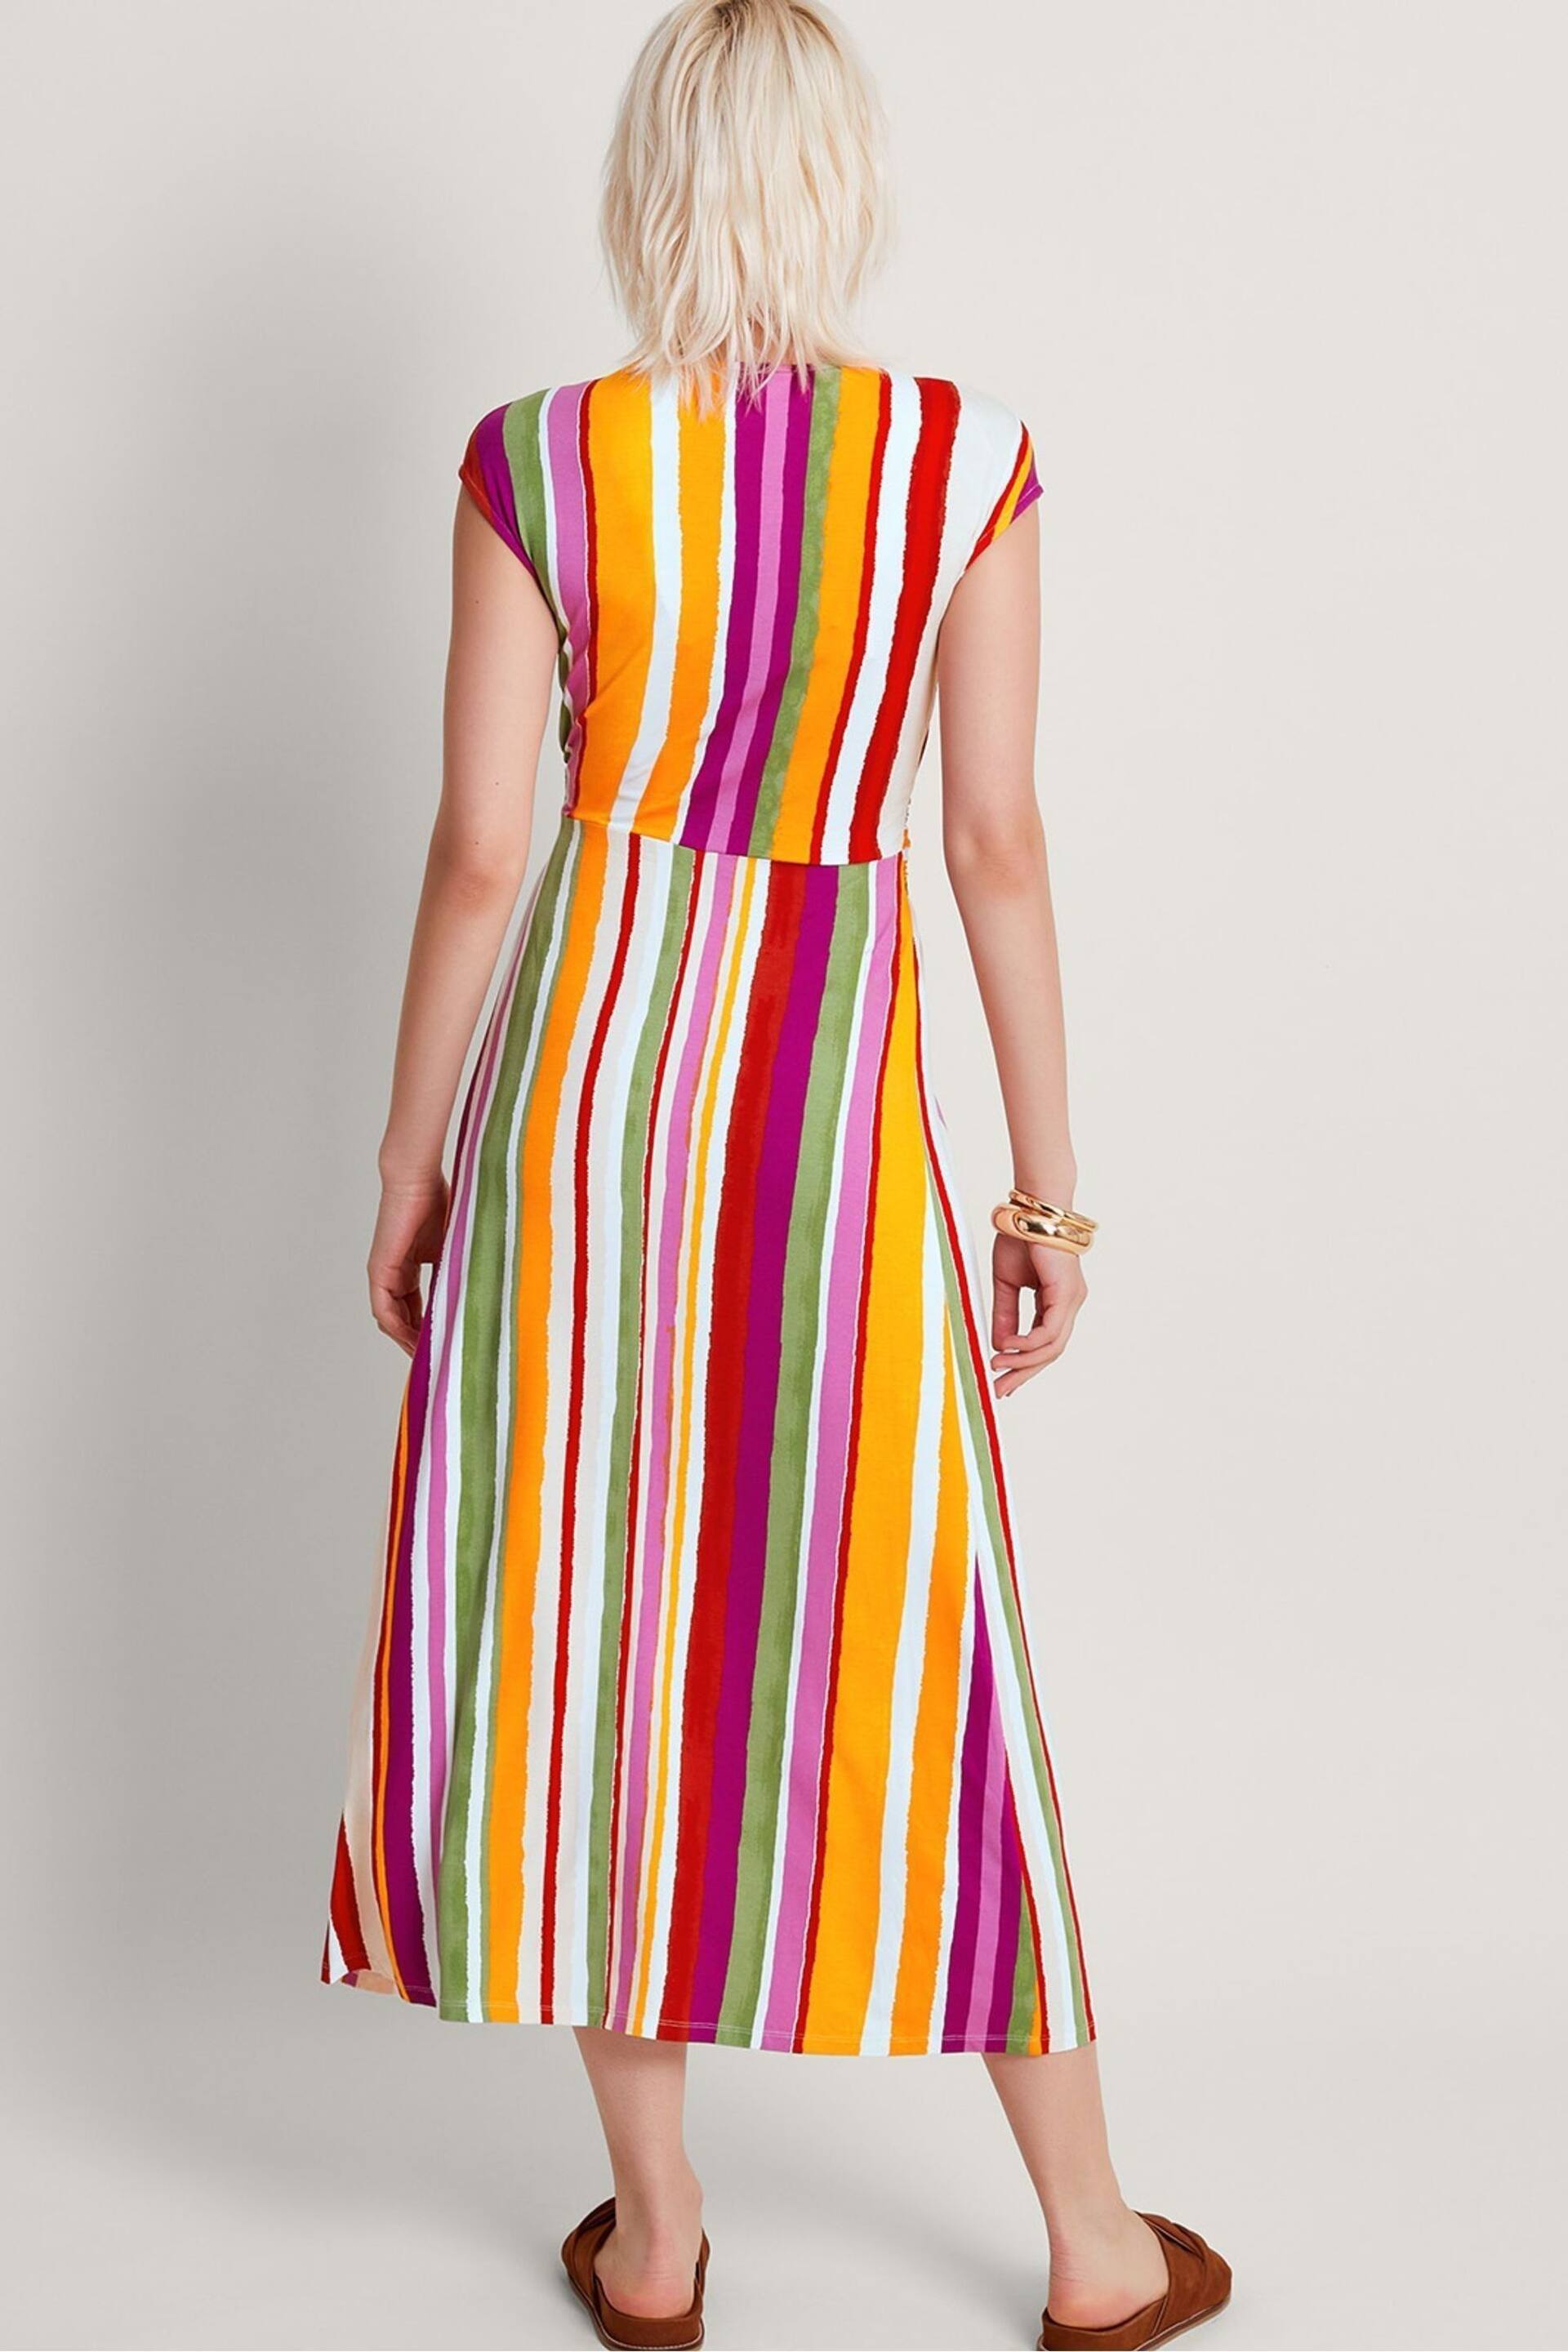 Monsoon Pink Elise Stripe Maxi Dress - Image 1 of 1